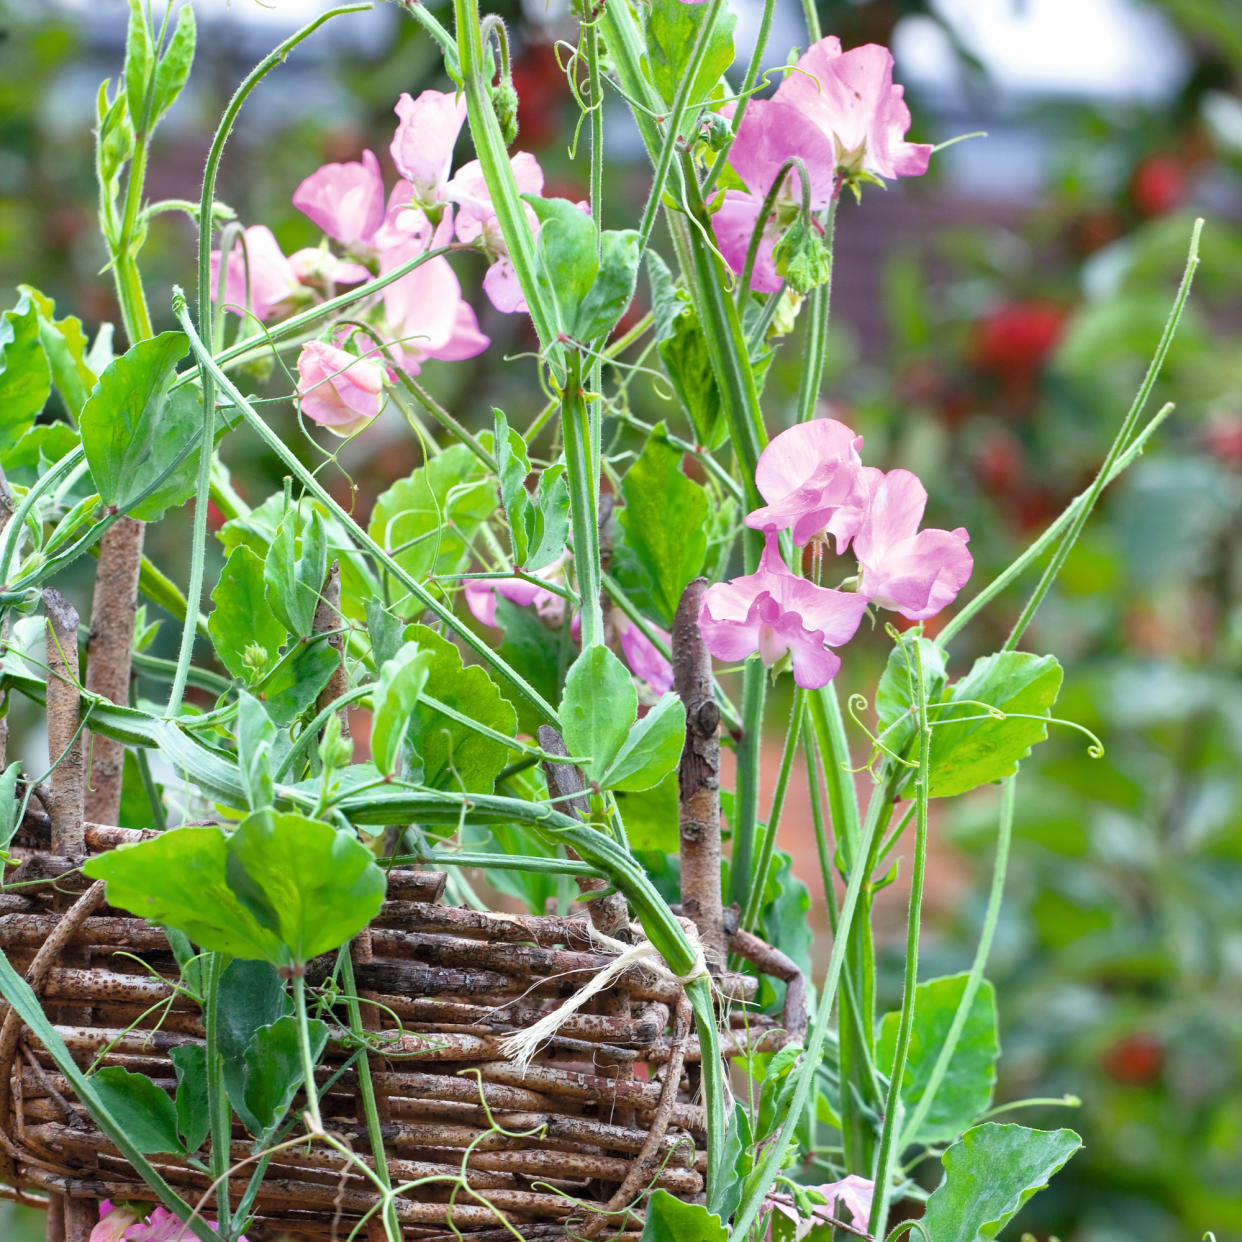  Sweet peas growing in basket and up trellis. 